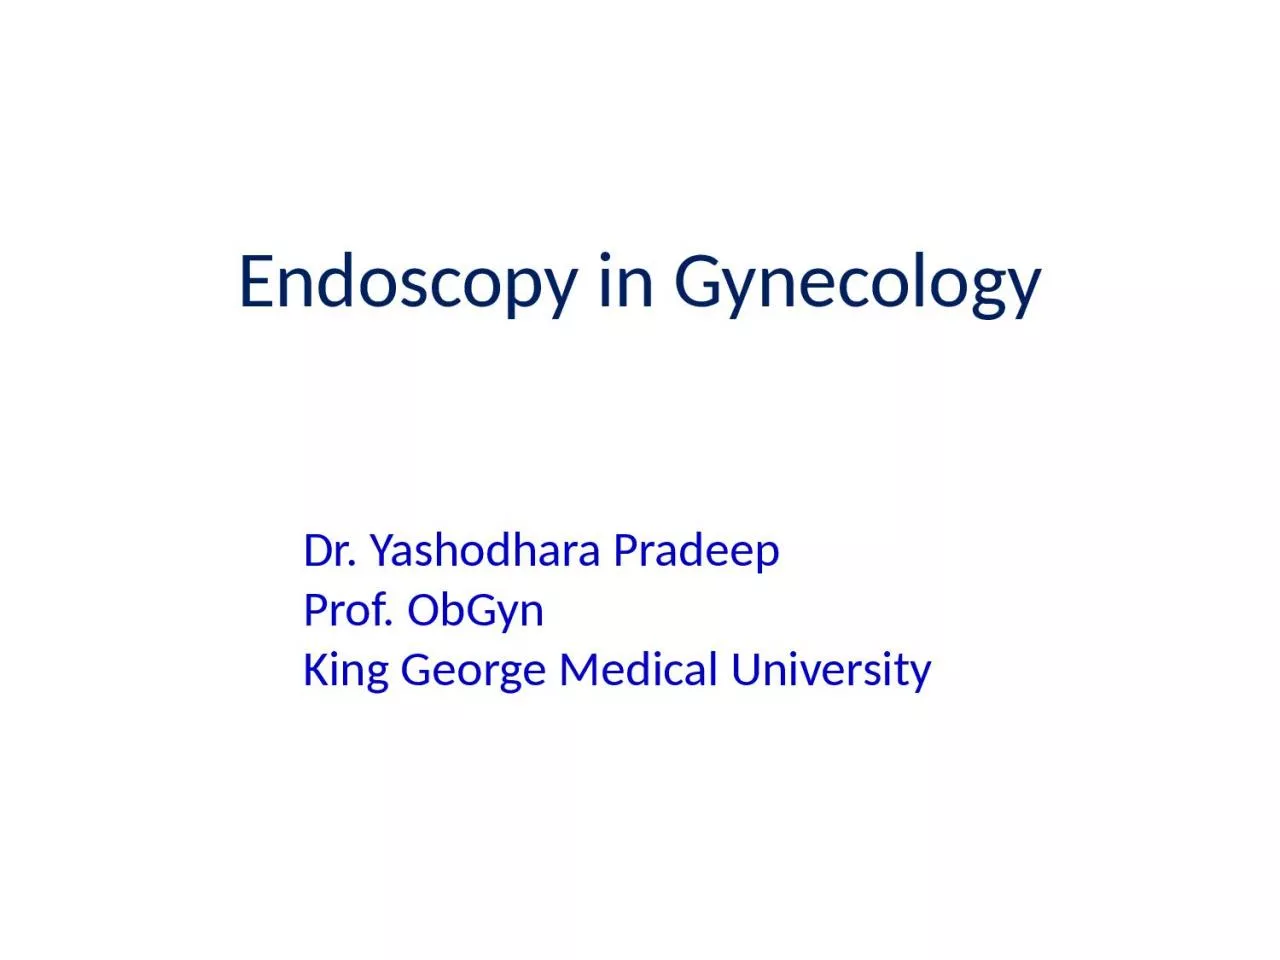 Endoscopy in Gynecology Dr. Yashodhara Pradeep